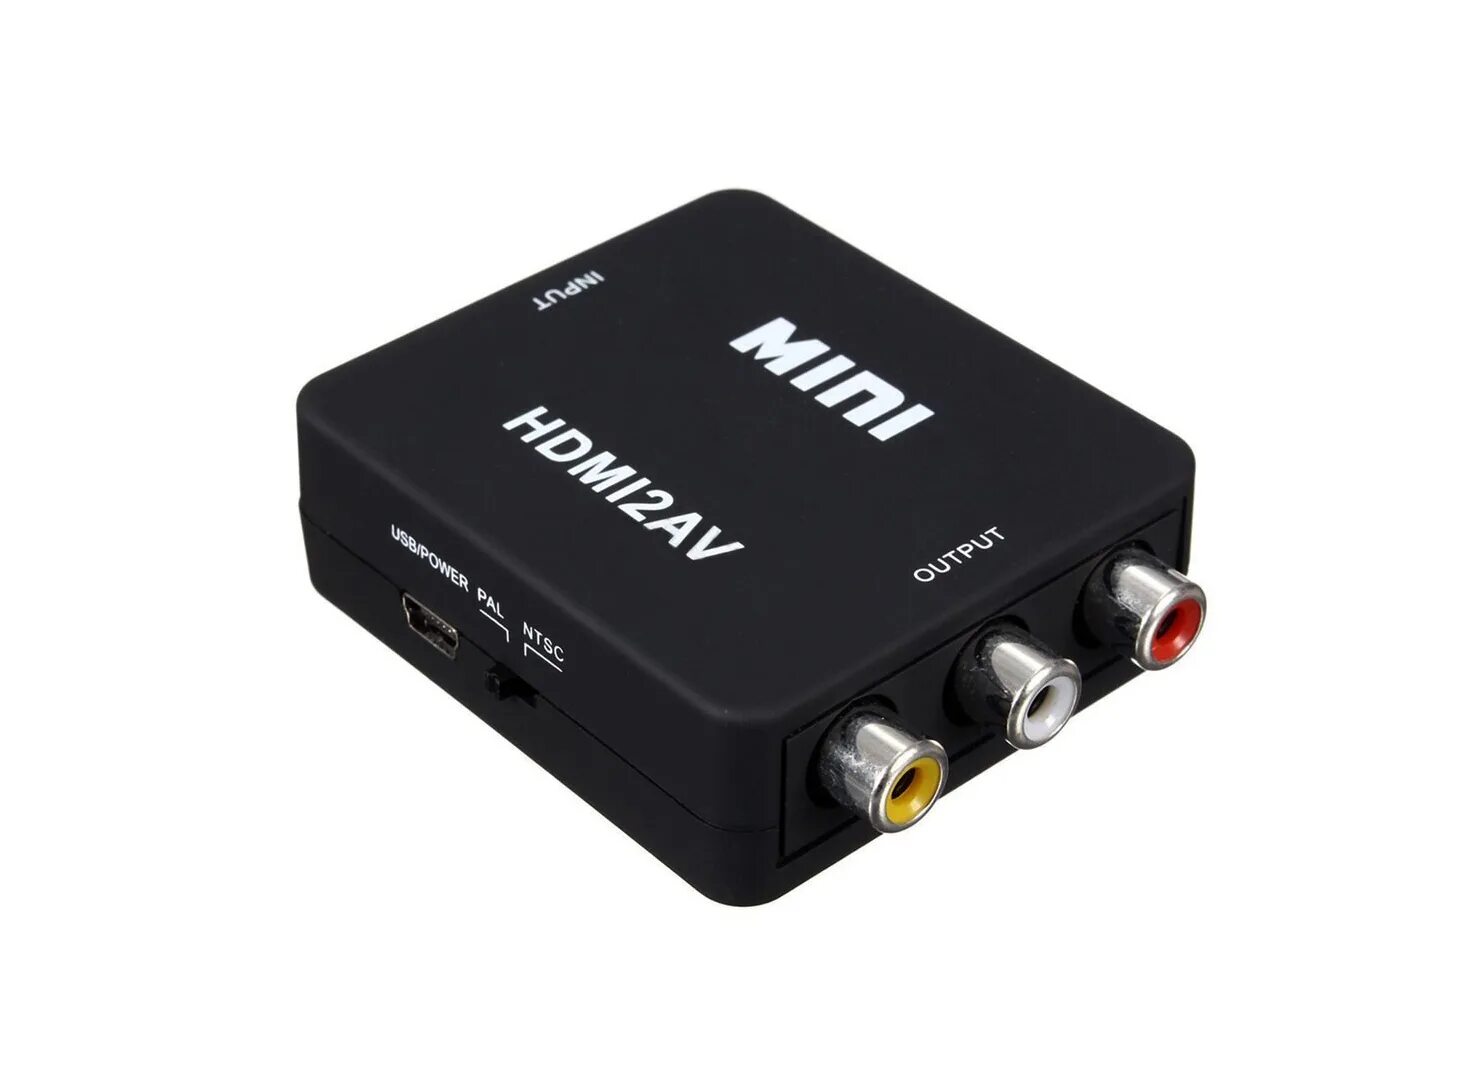 Адаптер Mini av/HDMI 1080p Converter to 3 RCA (Black). HDMI to RCA av Converter hdmi2av. Адаптер переходник RCA (тюльпан) HDMI. Переходник HDMI to av (RCA). Переходник av rca